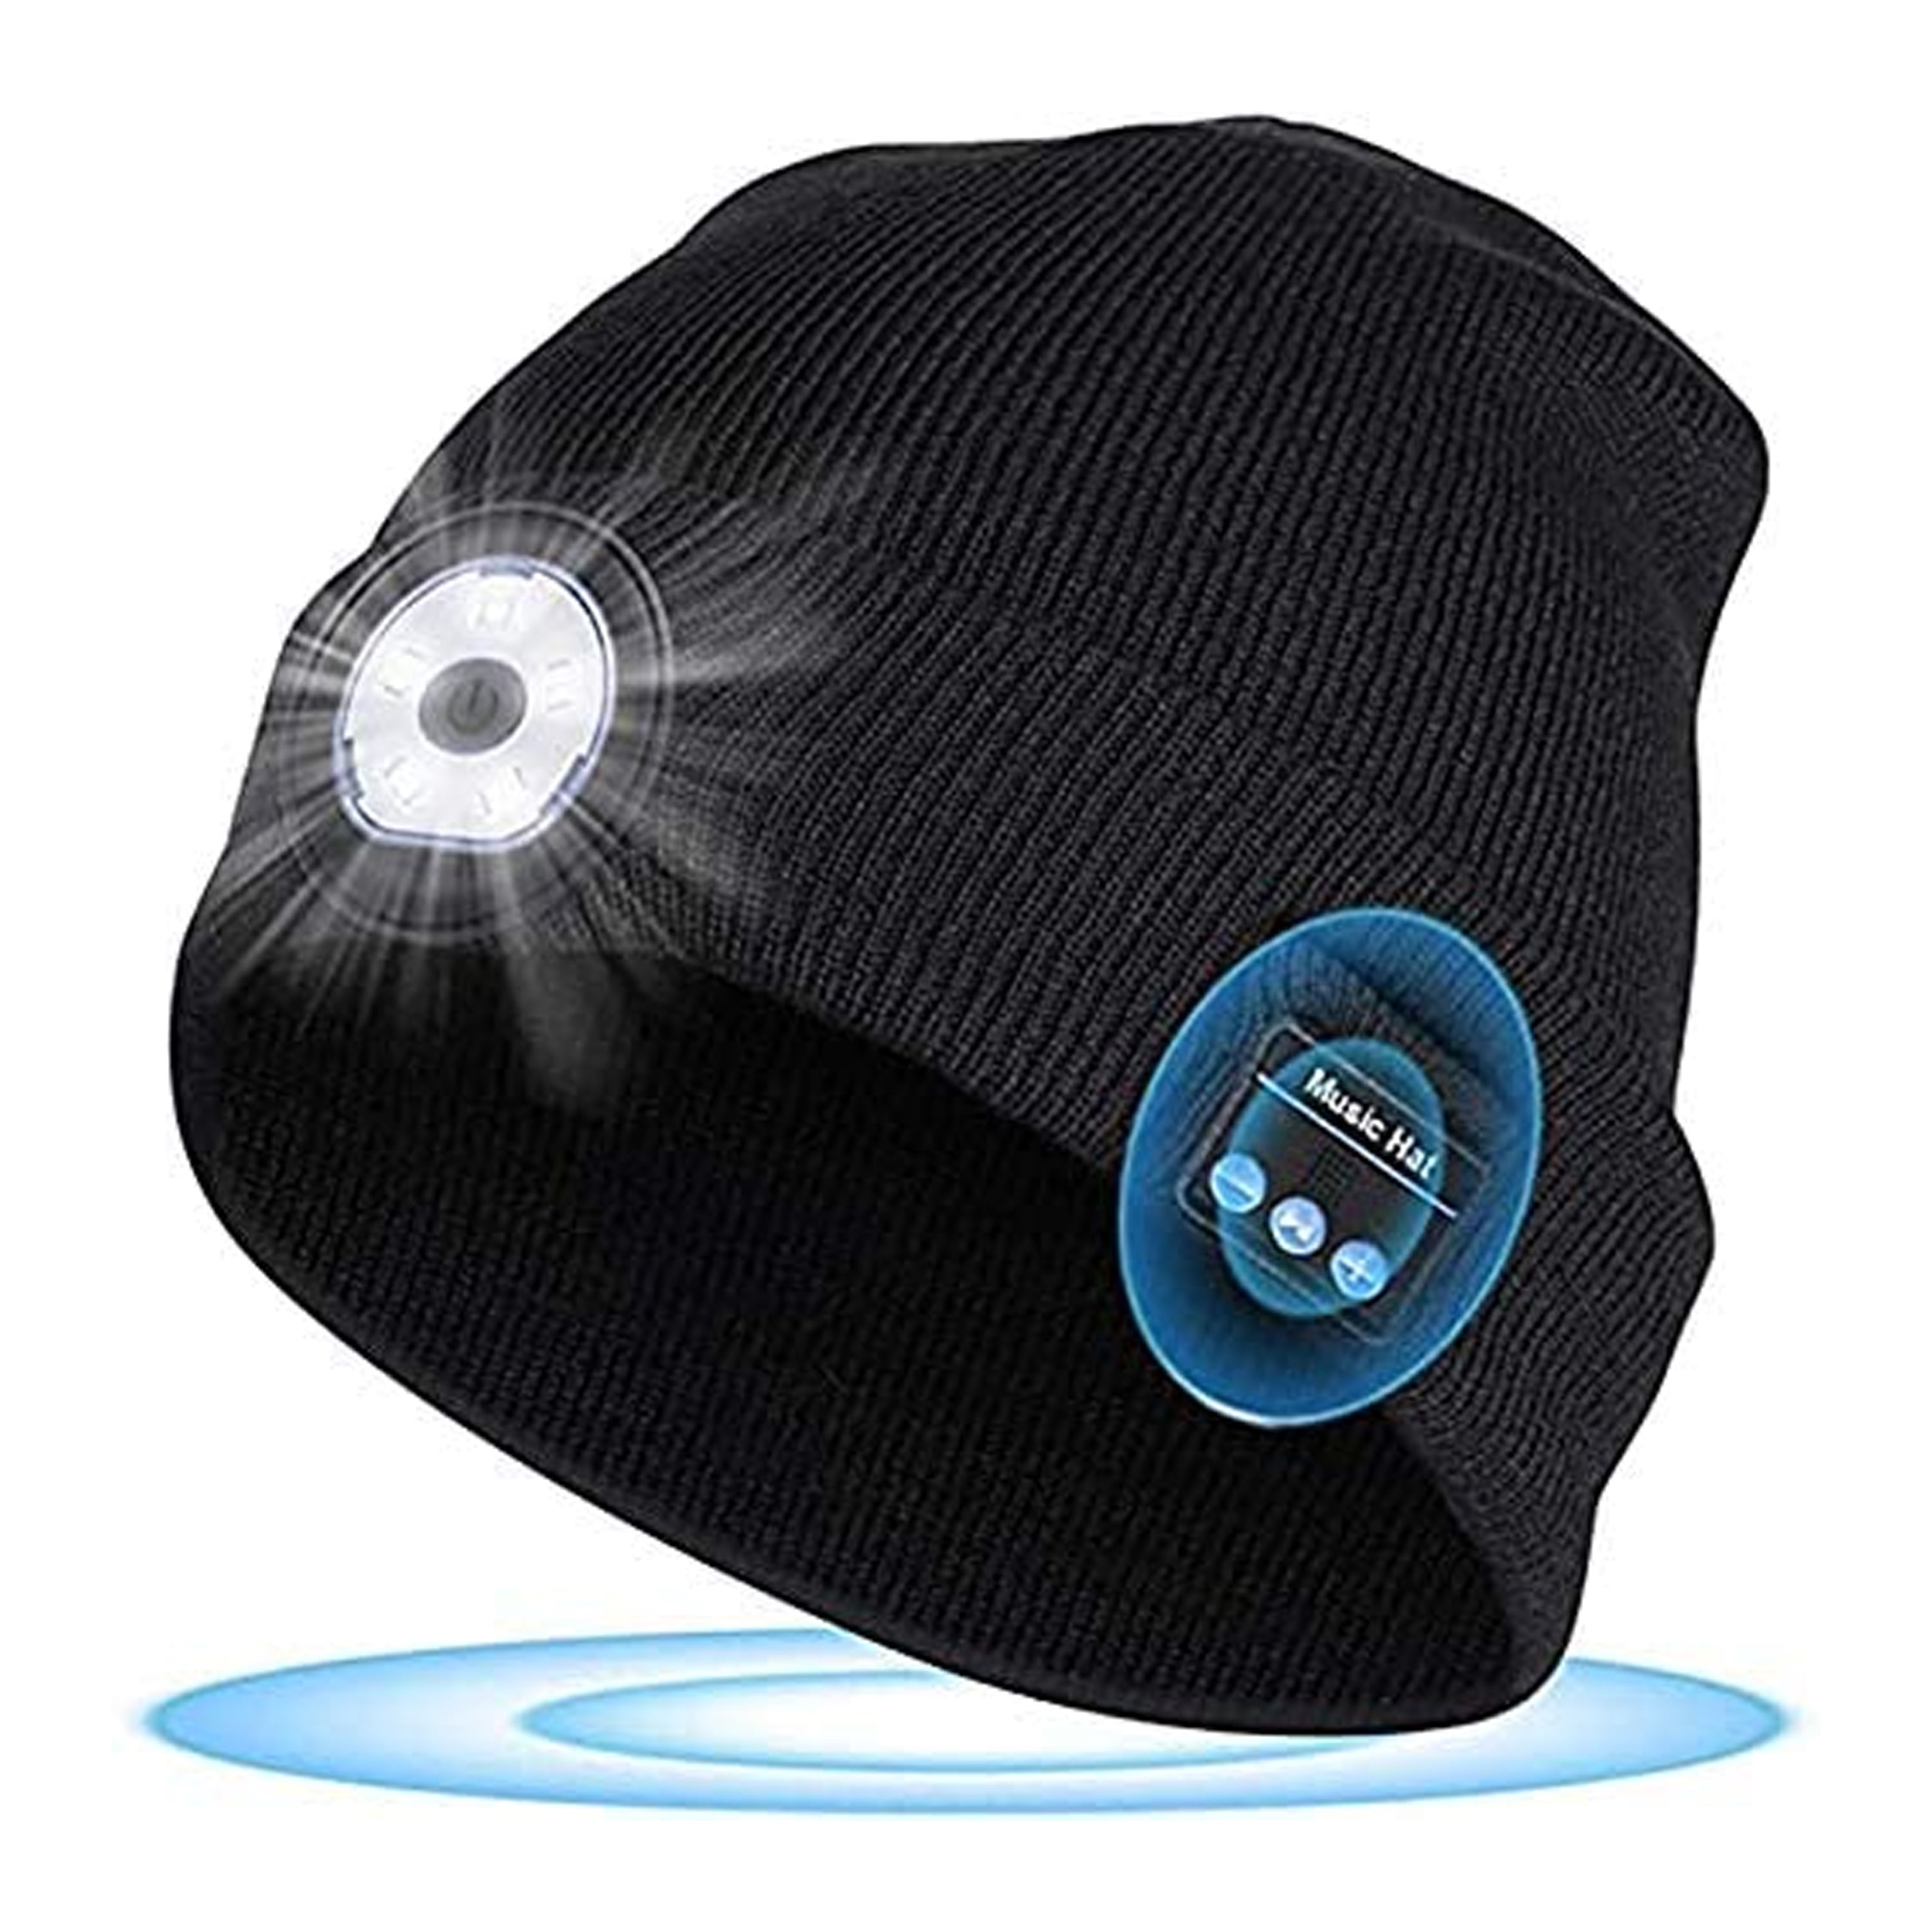 Awatty Bluetooth Beanie Hat V5.0 with Speakers Wireless Music Headset Winter Knit Running Cap Washable Bluetooth Stereo Headphone for Men Women Mom Her Teens Boys Girls Black